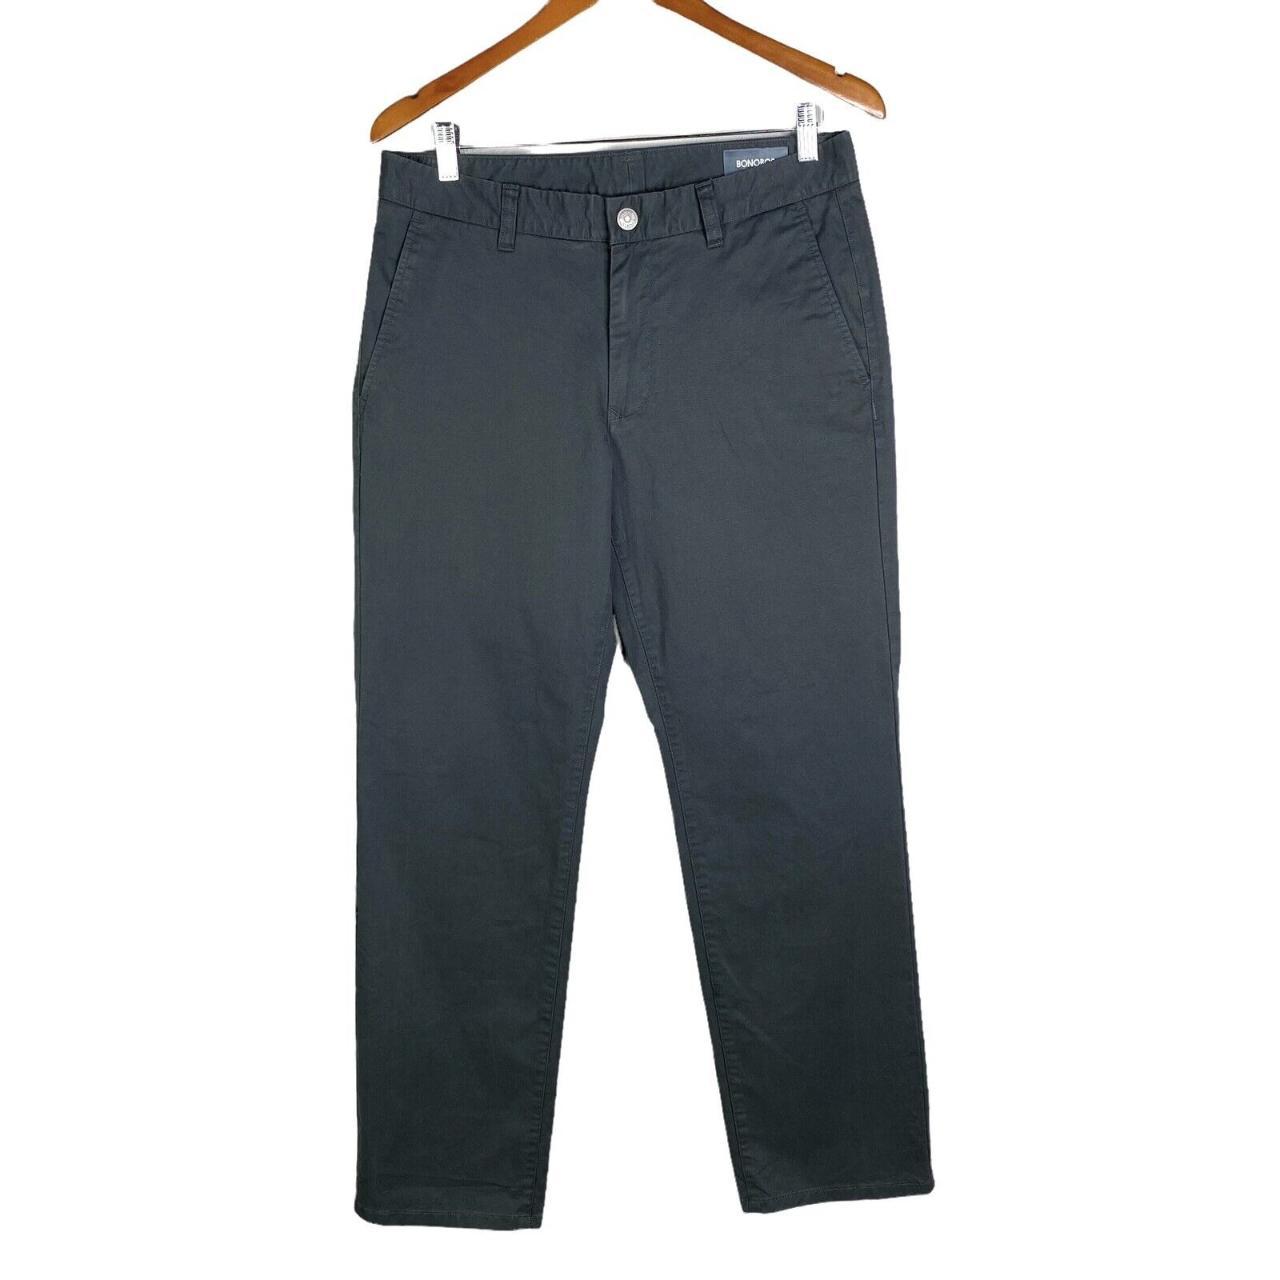 Bonobos Pants Mens 31x30 Gray Tailored Straight... - Depop